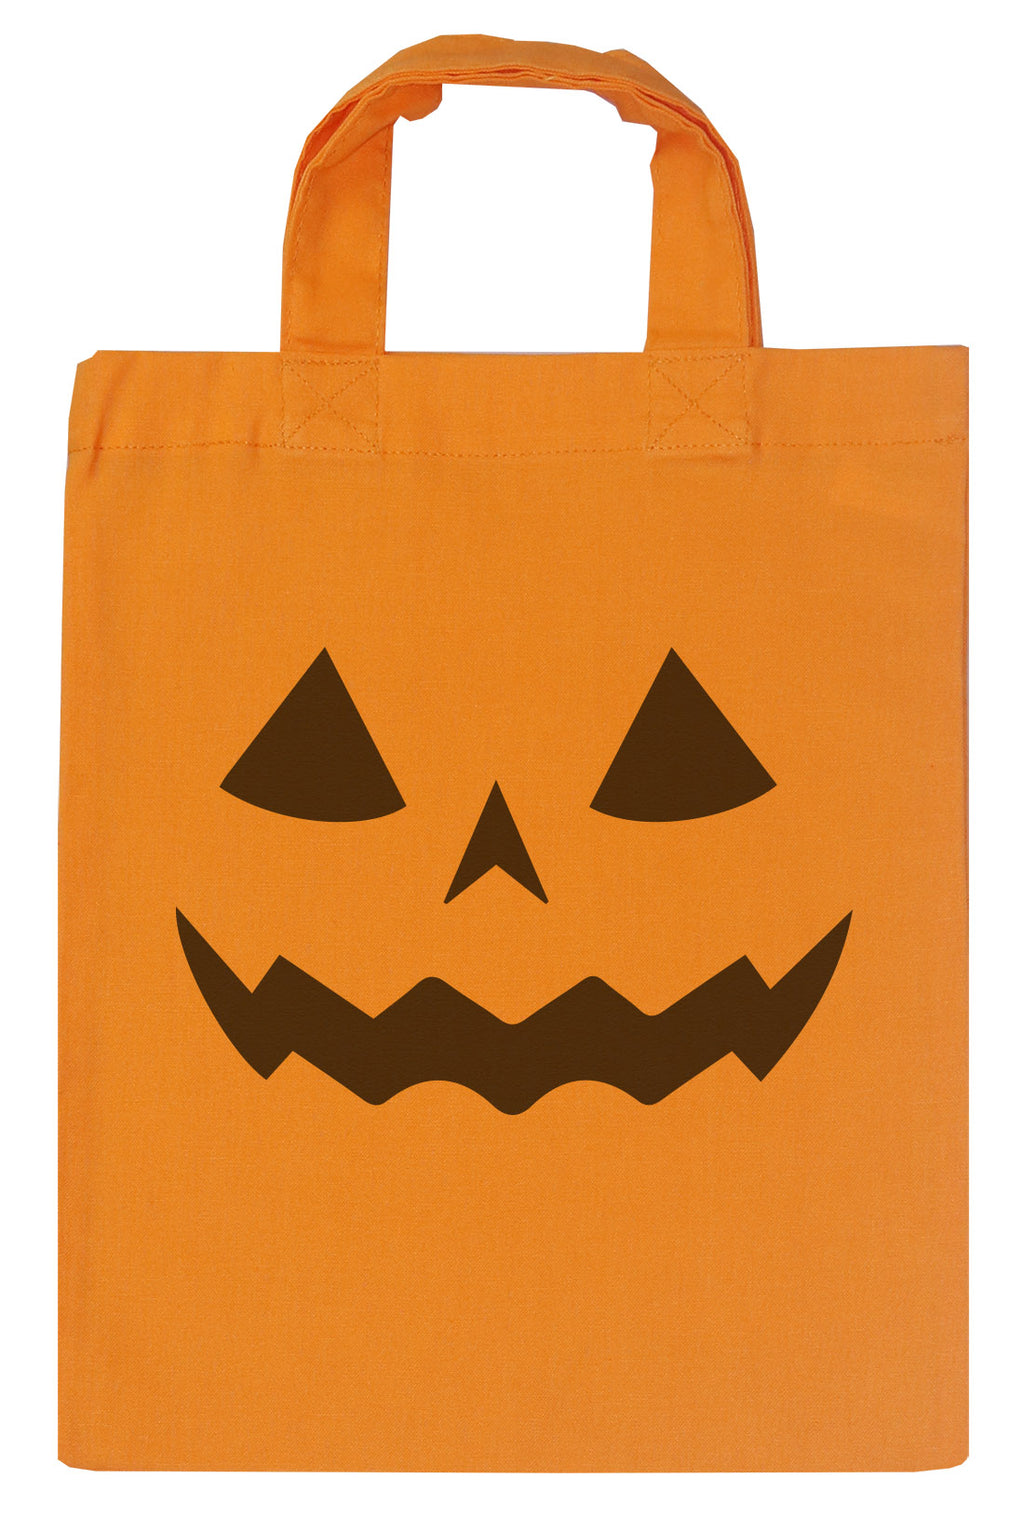 Pumpkin Boy Trick or Treat Bag - Small